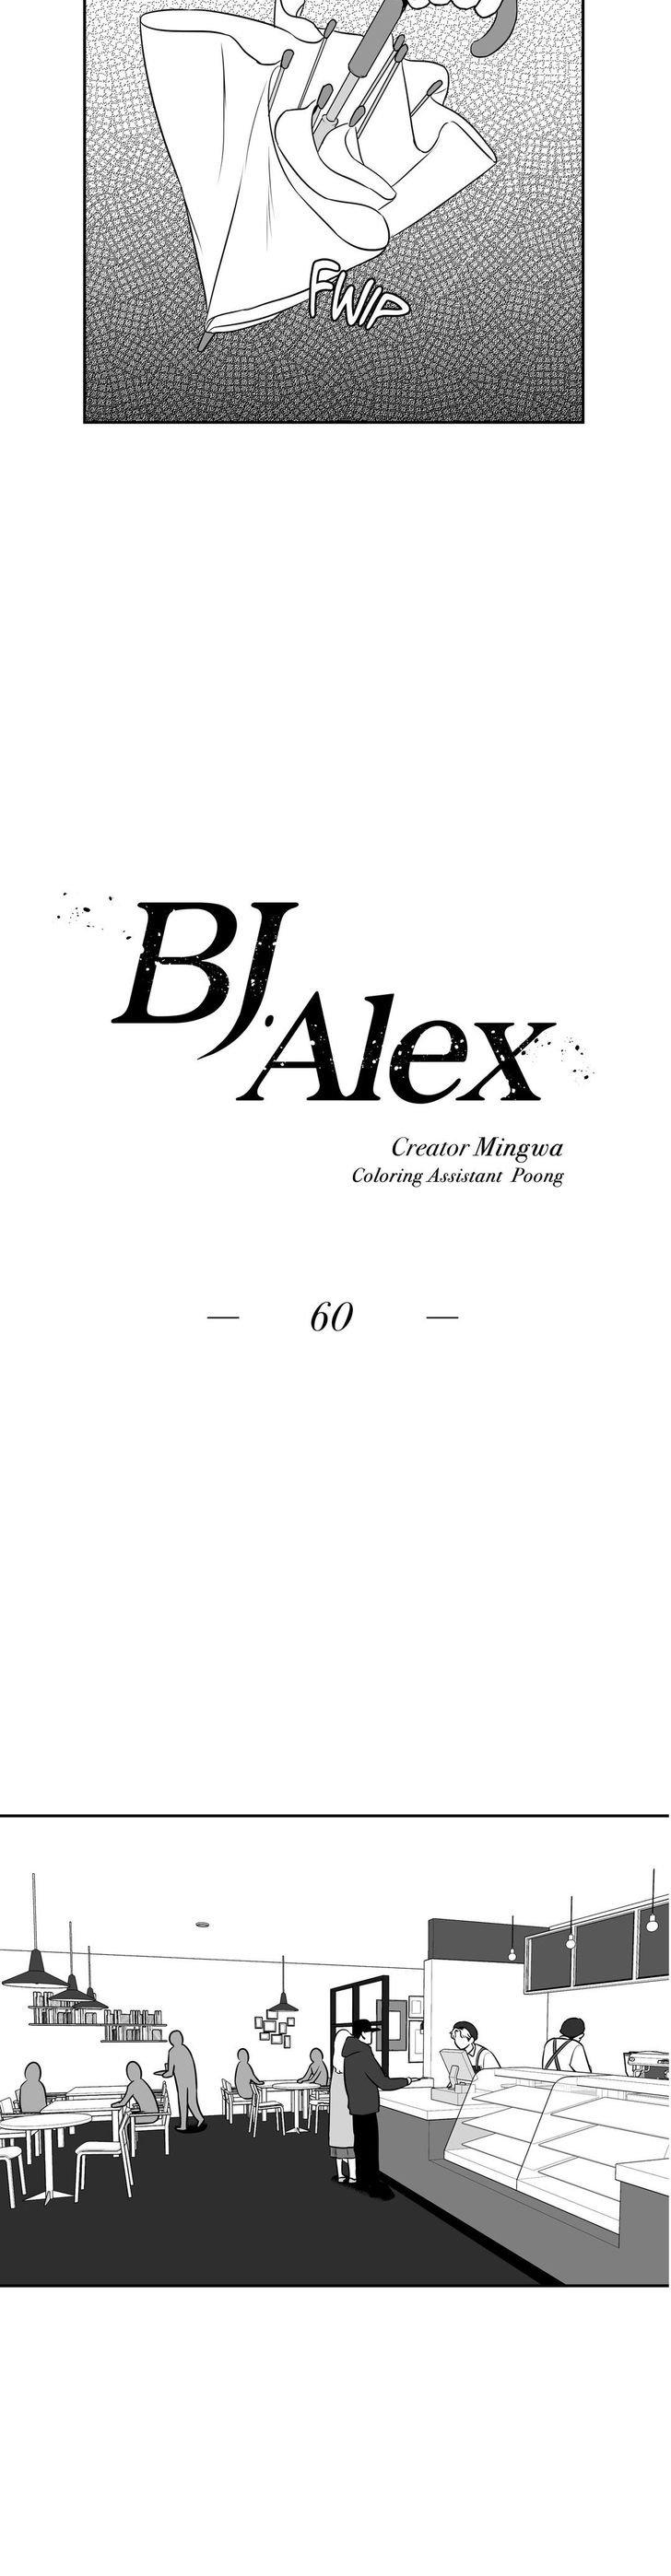 Bj Alex, Chapter 60 - Ch.060 image 03